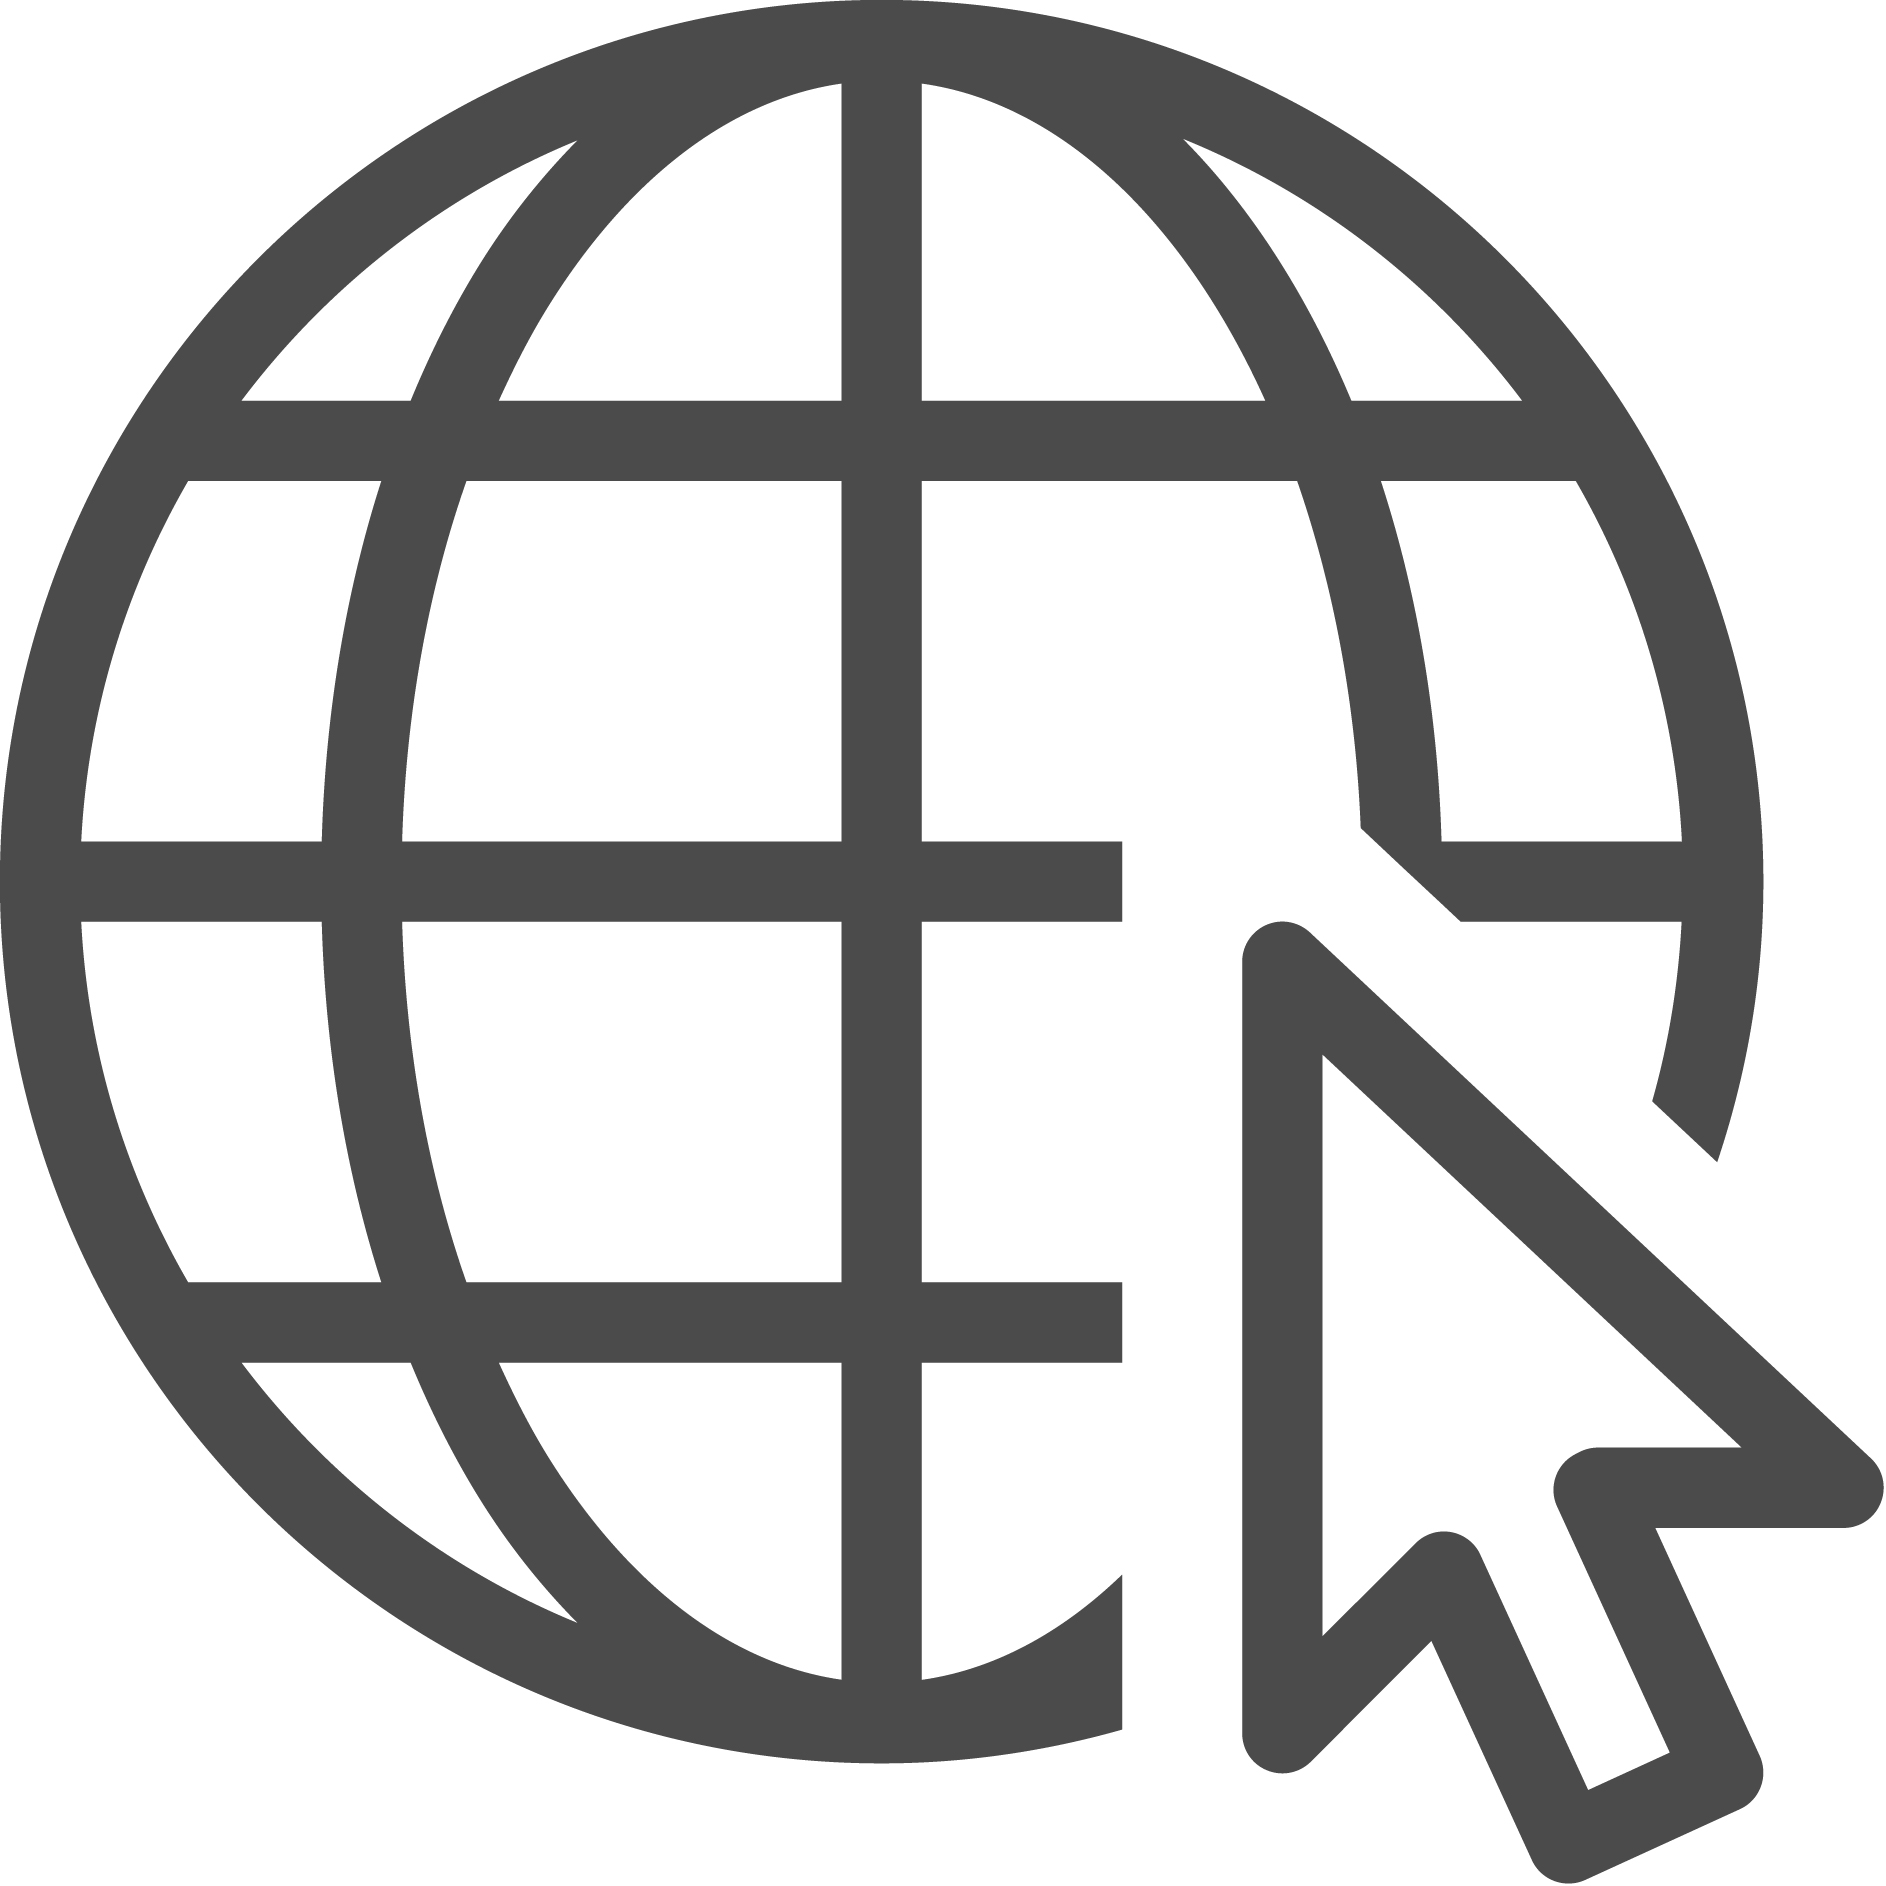 Business Development web resource icon